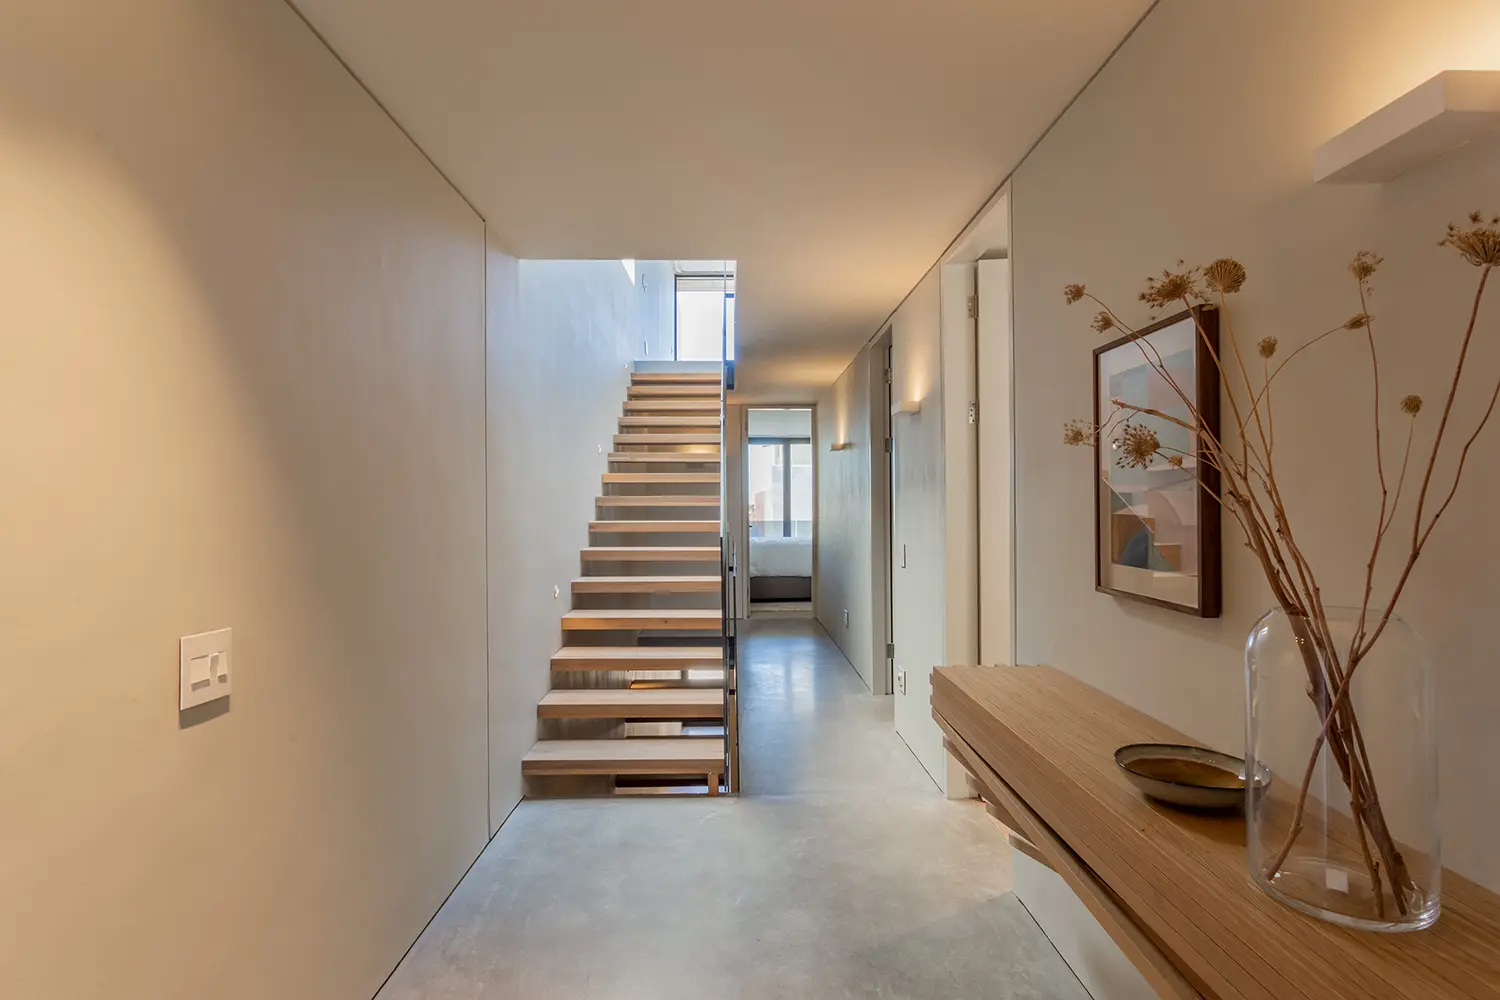 Bakoven Beach Houses entry hallway interior design